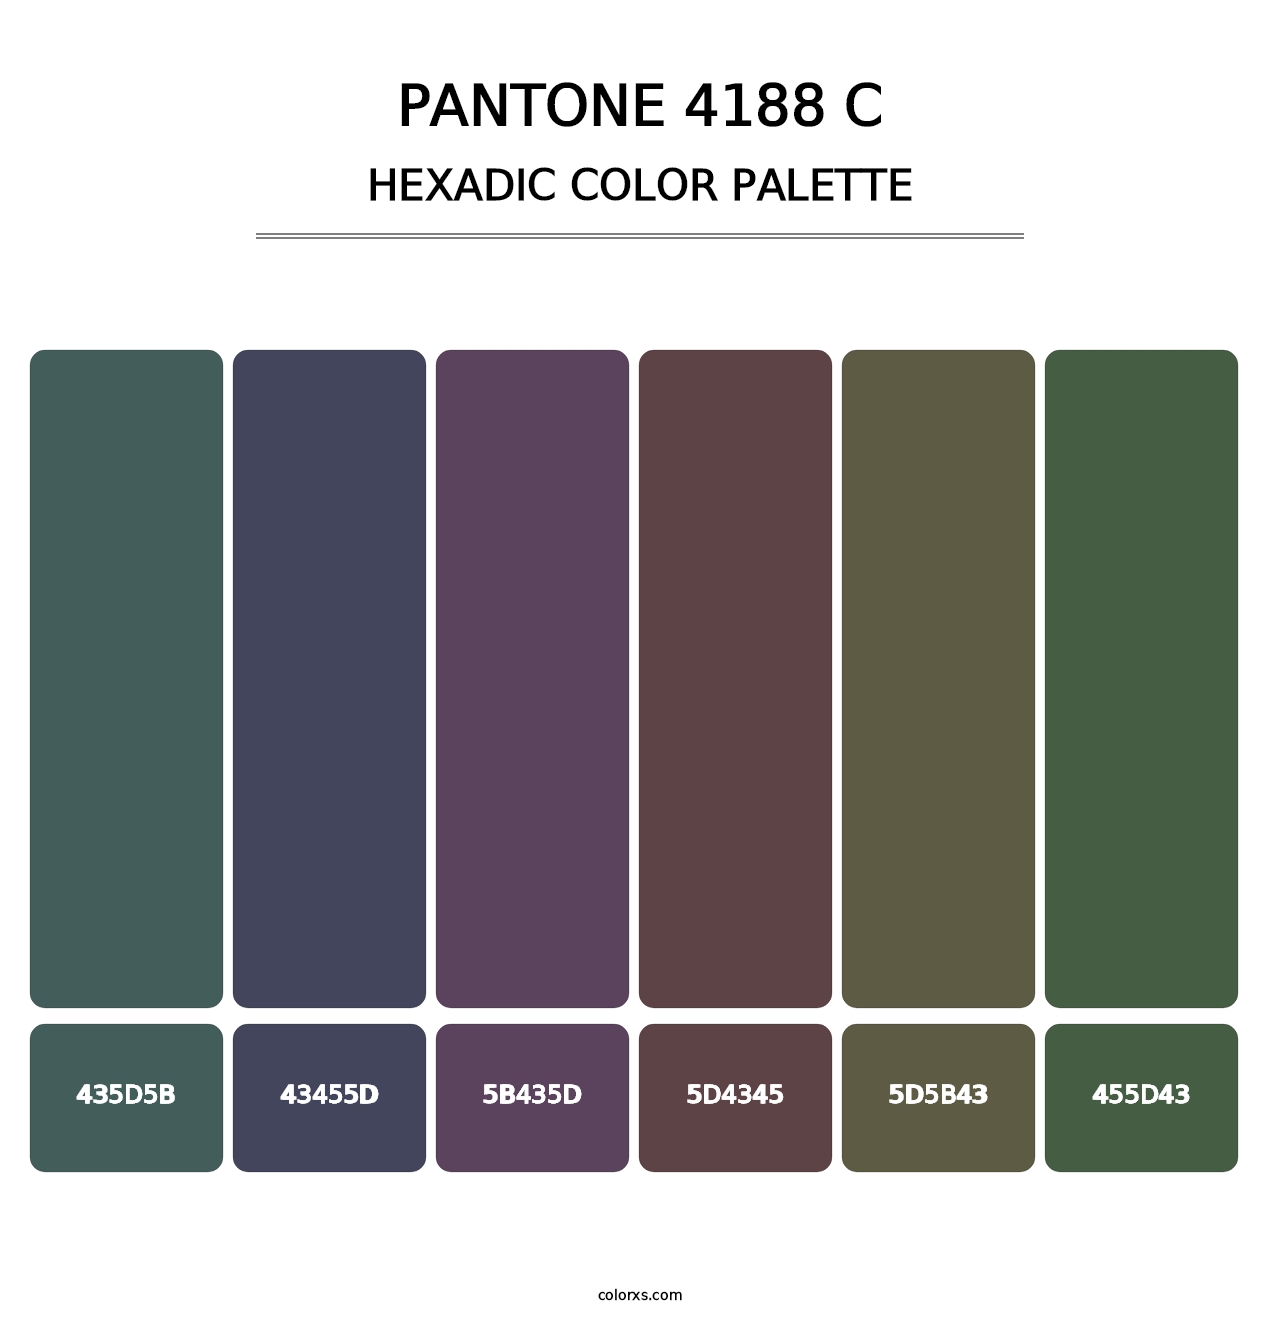 PANTONE 4188 C - Hexadic Color Palette